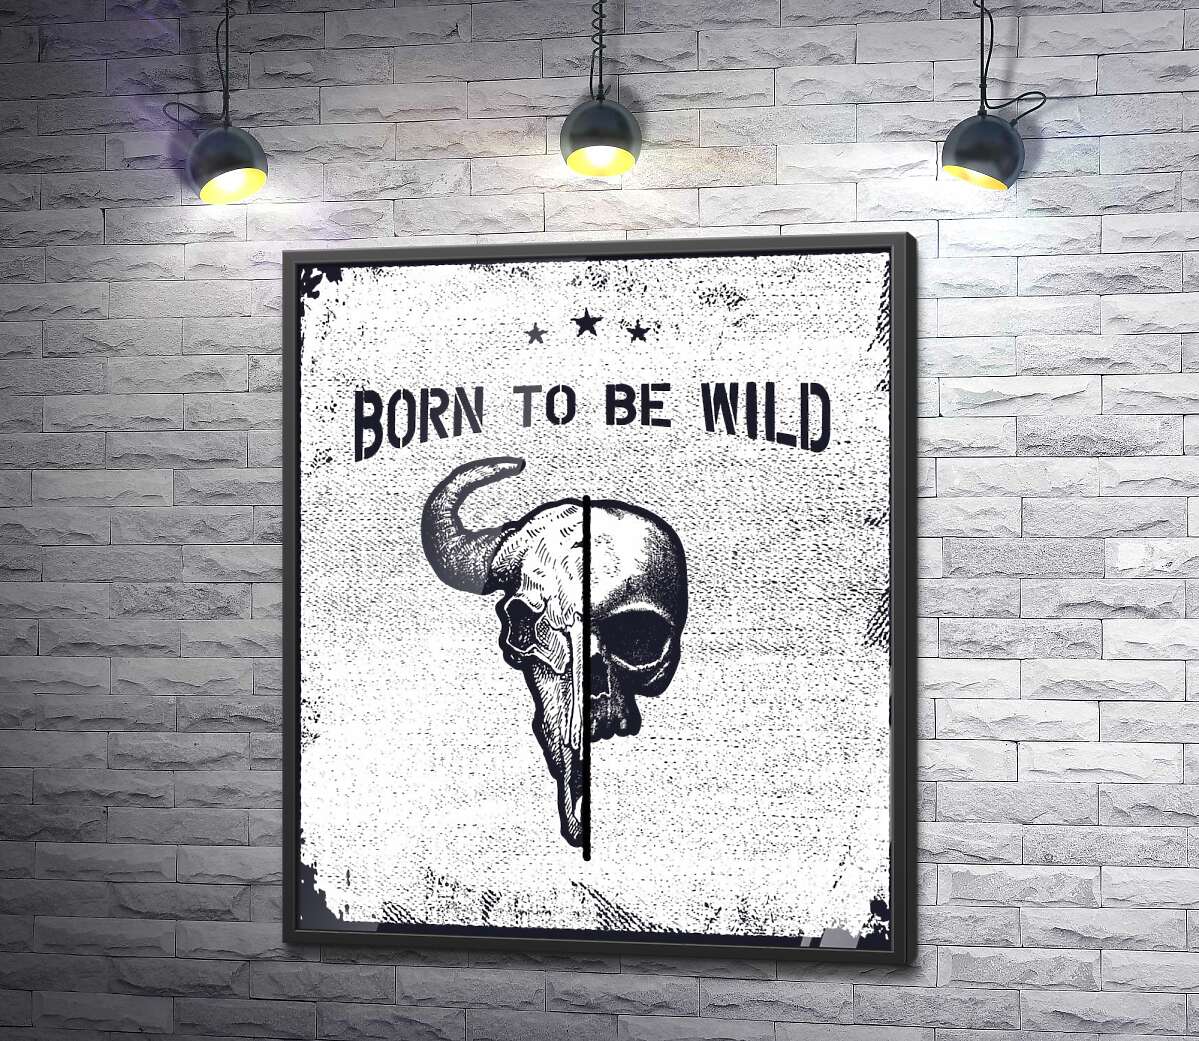 постер Соединение черепов человека и быка под фразой "born to be wild"